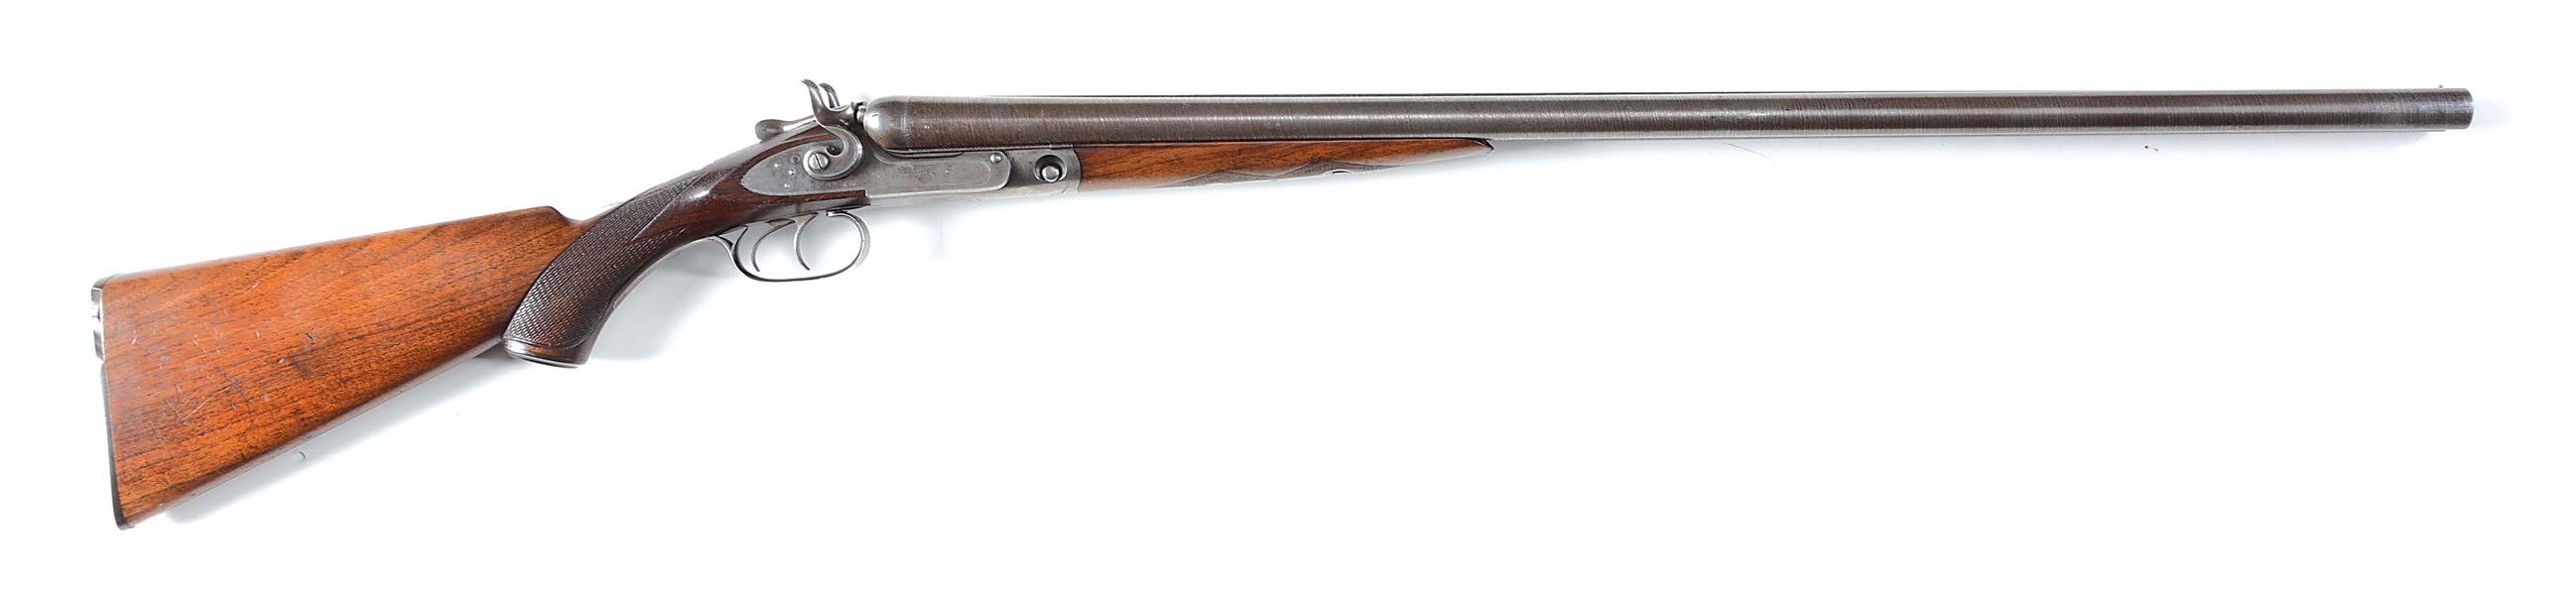 (A) PARKER BROS. DOUBLE HAMMER TOP LEVER SXS 12 GAUGE SHOTGUN (1893).